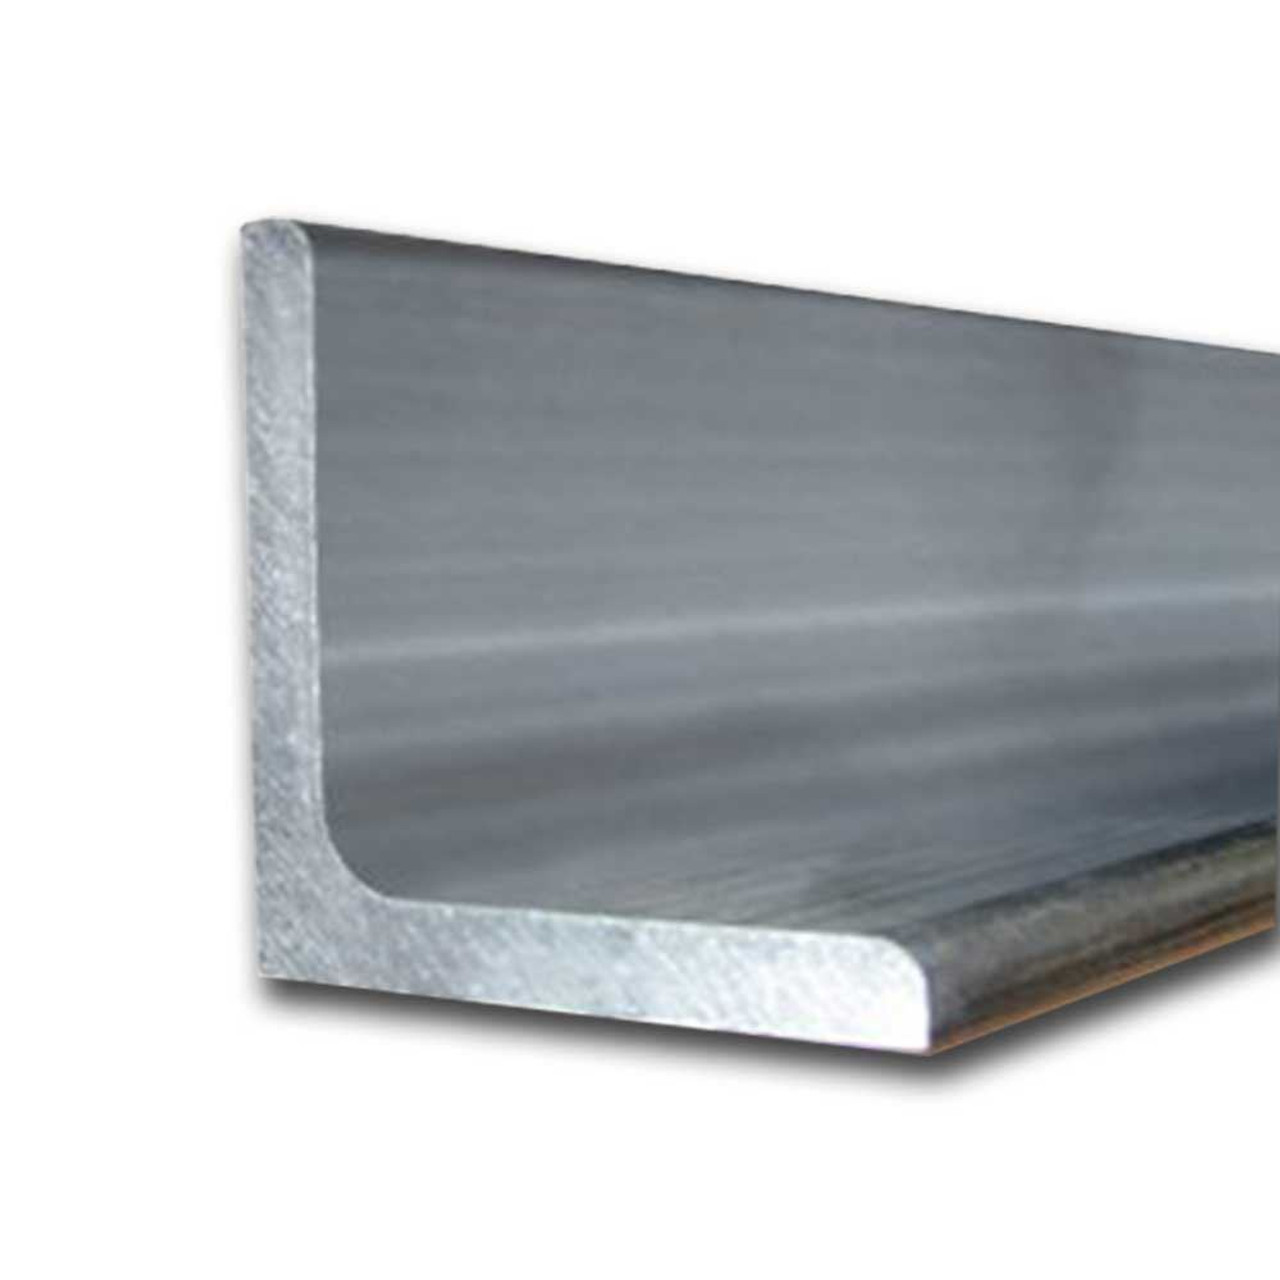 1.5" x 1.5" x 0.188" x 72 inches, 6061-T6 Aluminum Angle